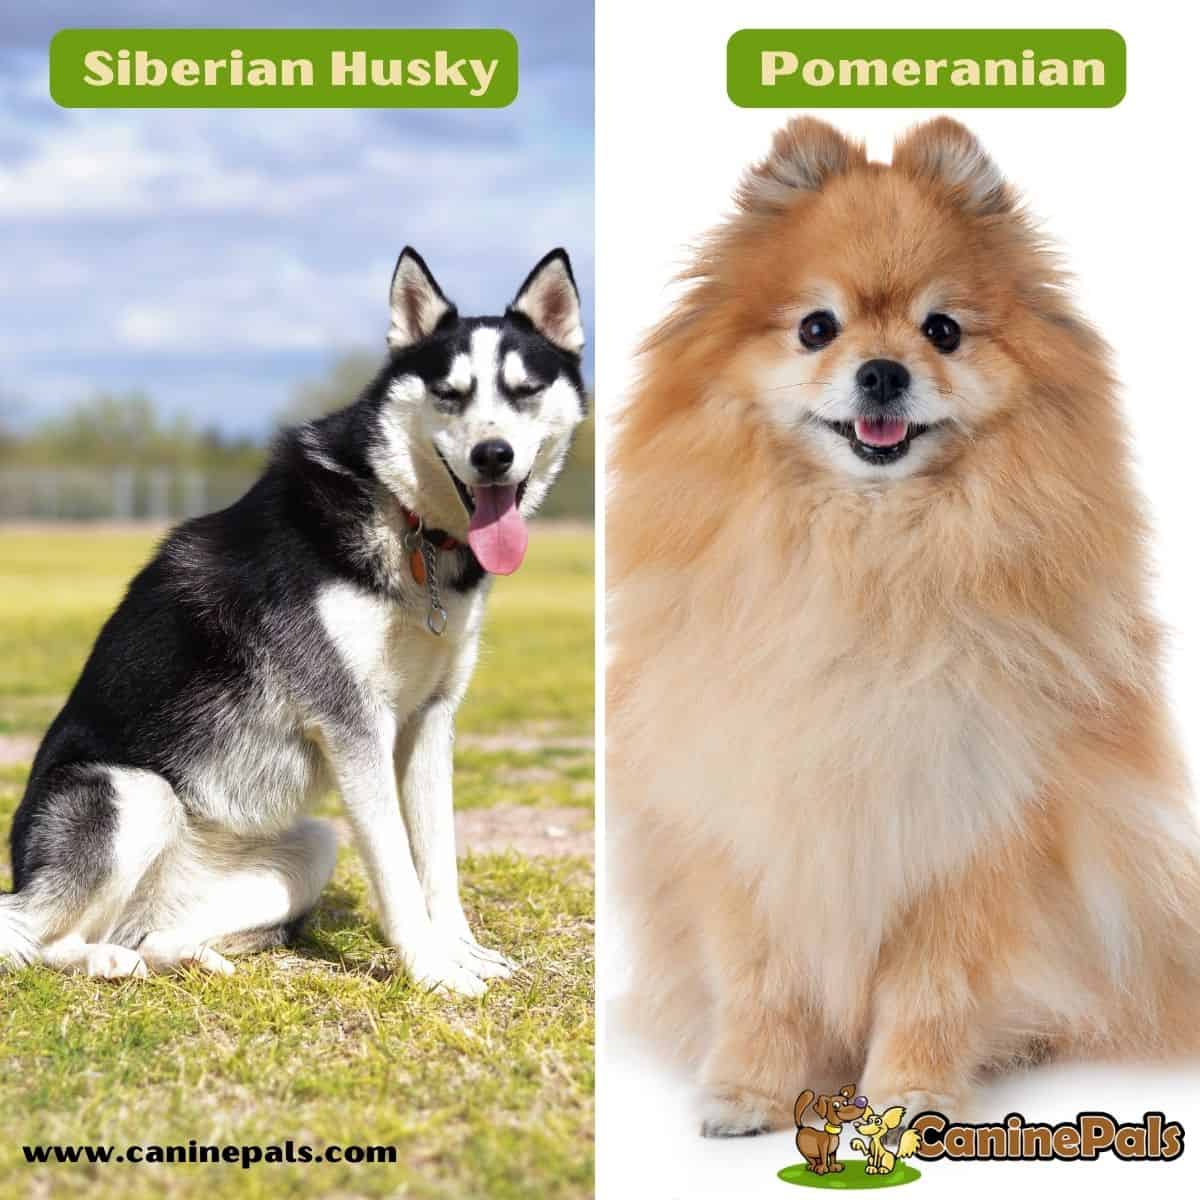 Siberian Husky and Pomeranian